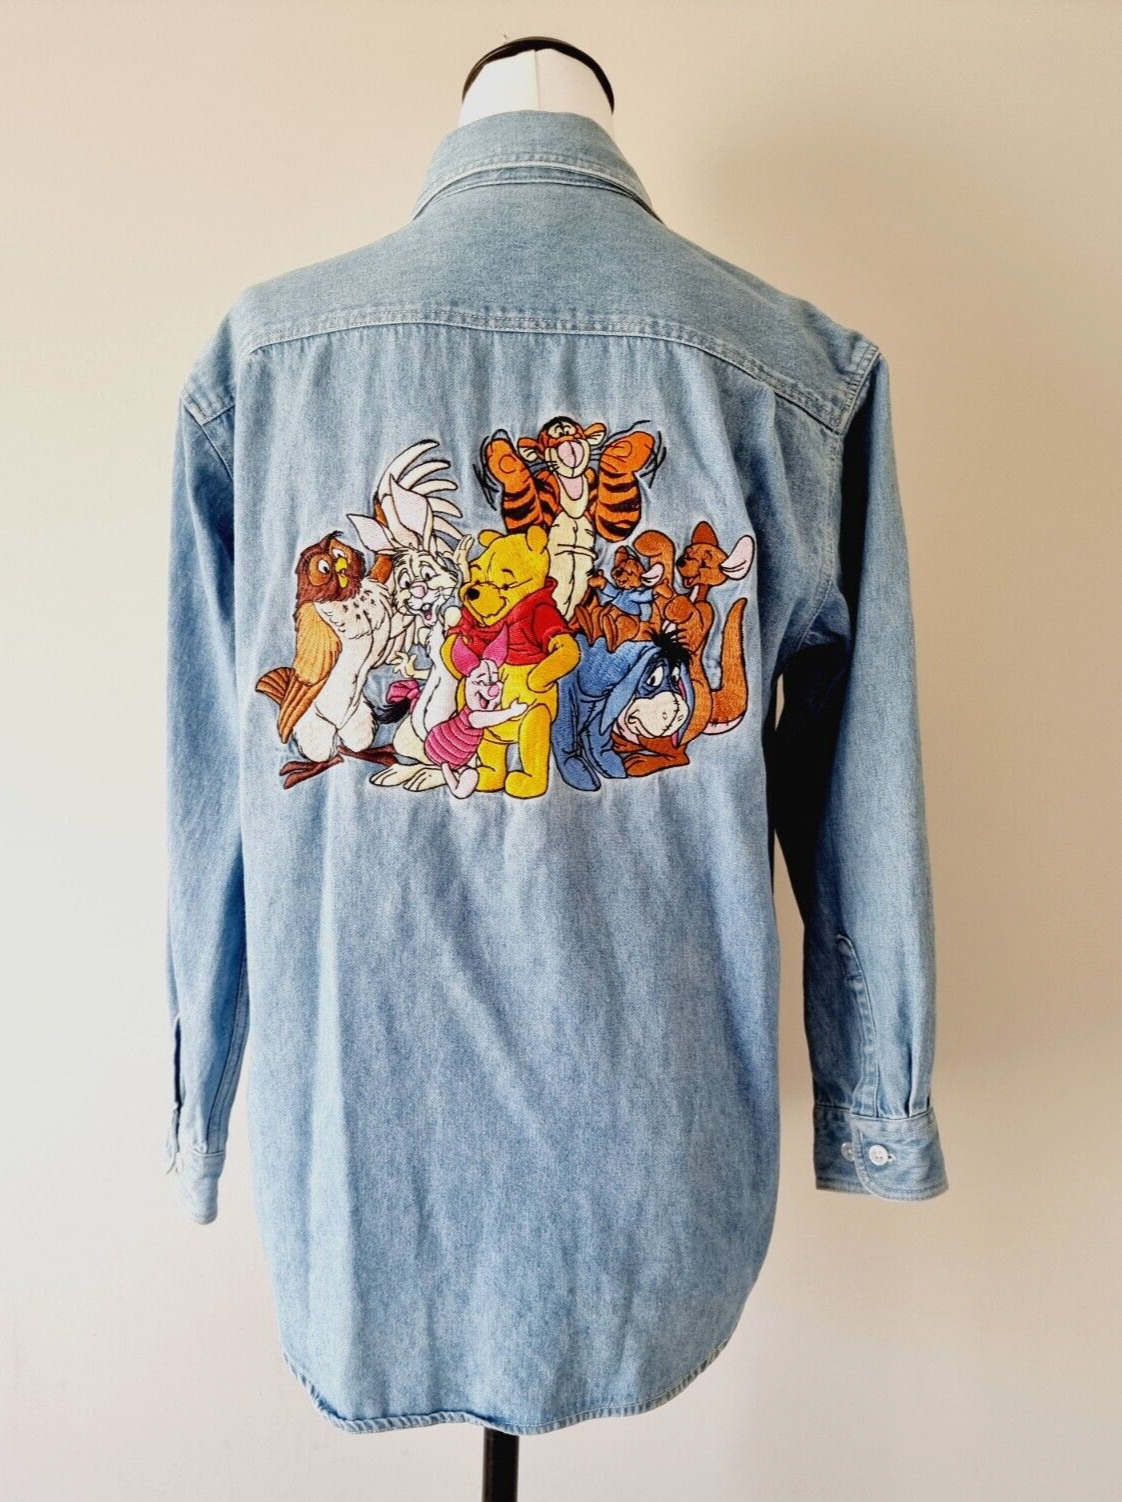 DISNEY Store WINNIE THE POOH Vintage Denim Embroidered Shirt SIZE MEDIUM